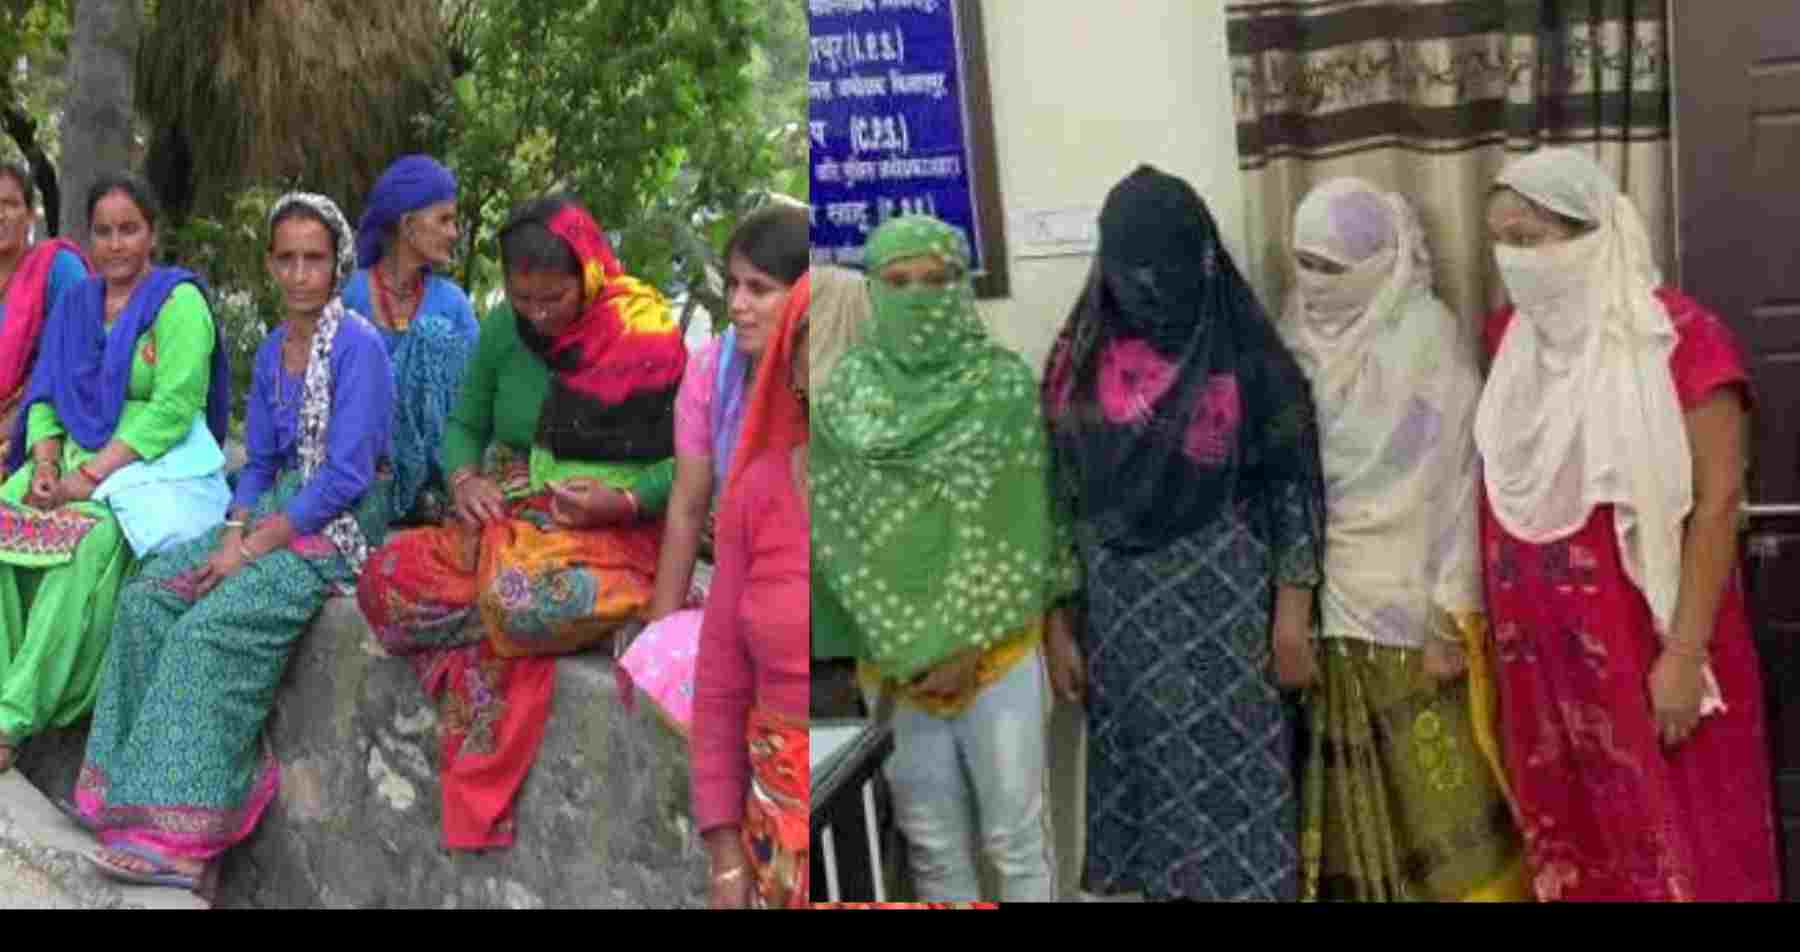 Uttarakhand news: Woman claims to have converted to religion in purola uttarakashi, peoples are angry. Purola uttarakashi religion conversation